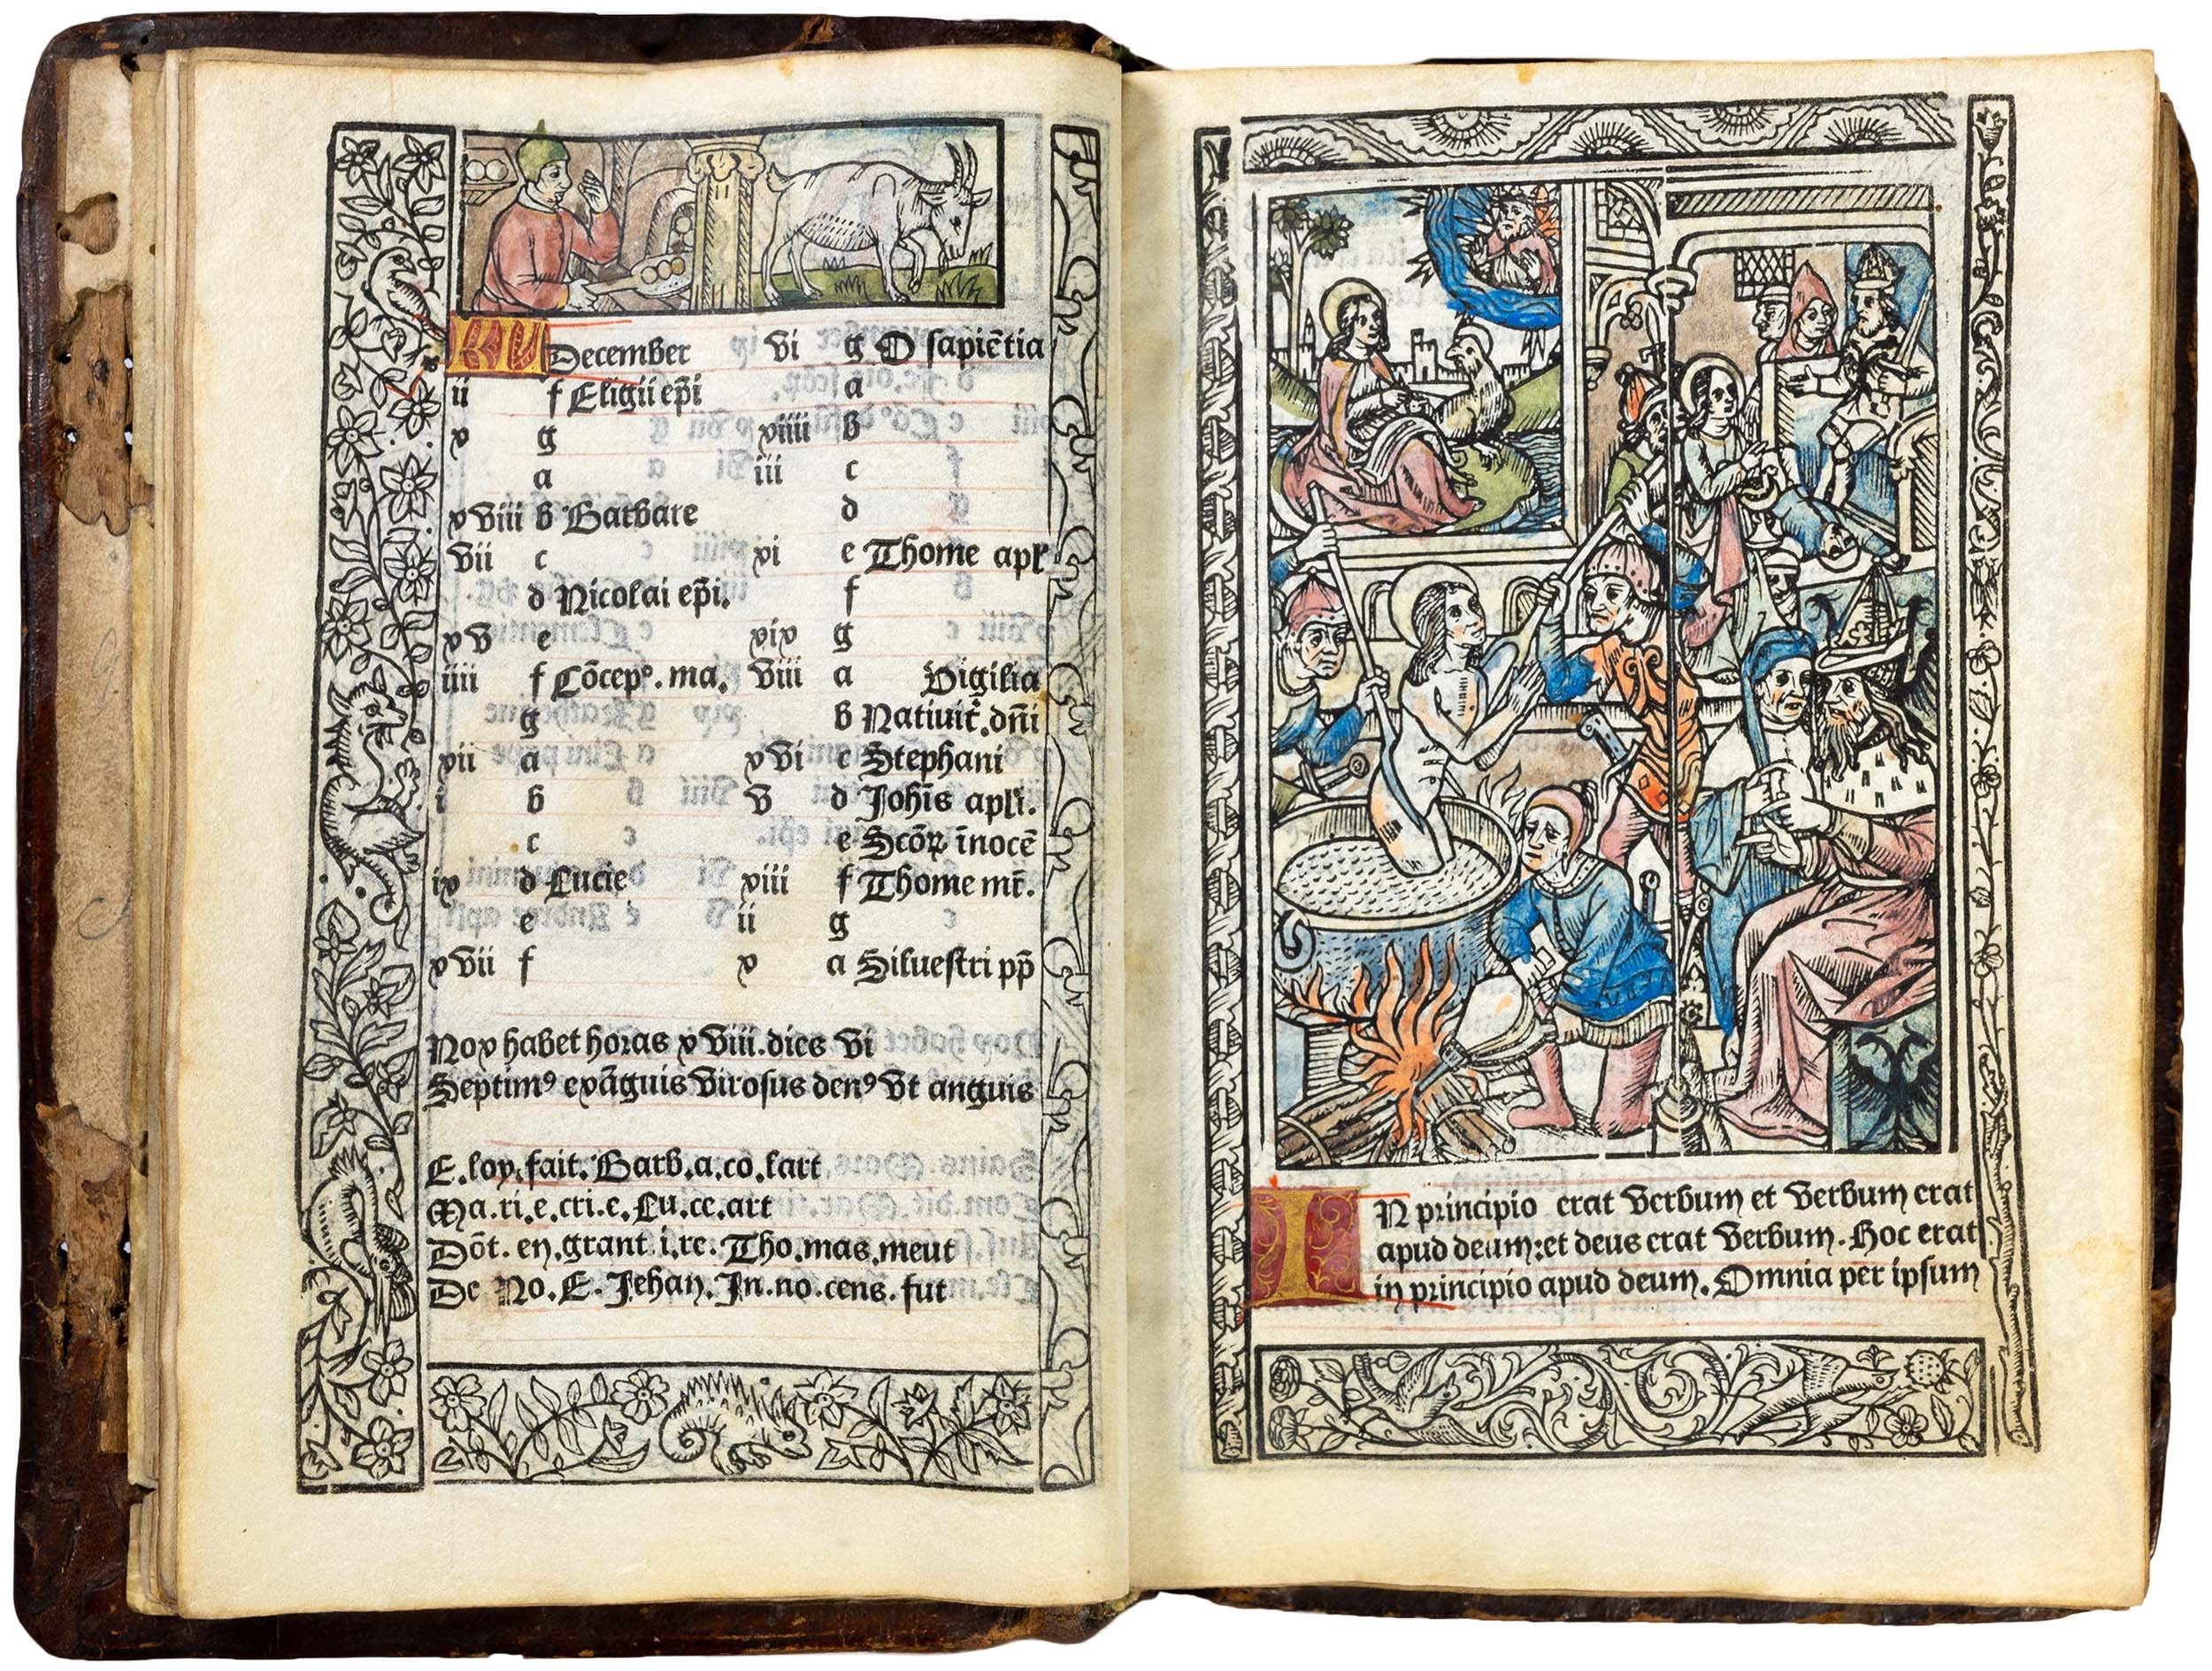 Printed-book-of-hours-chalon-sur-saone-dupre-1488-illuminated-vellum-horae-bmv-12.jpg